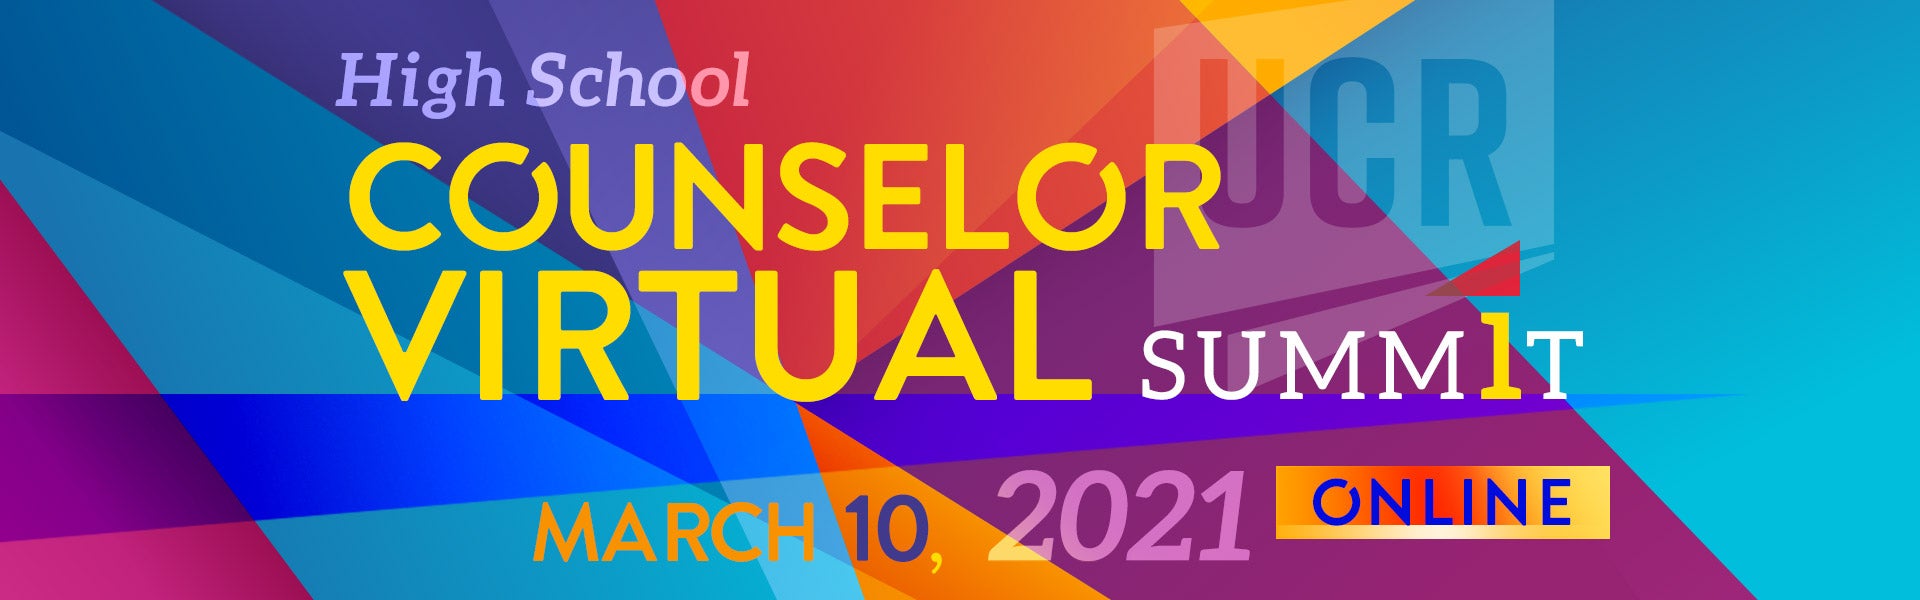 High School Counselor Virtual Summit | Undergraduate Admissions